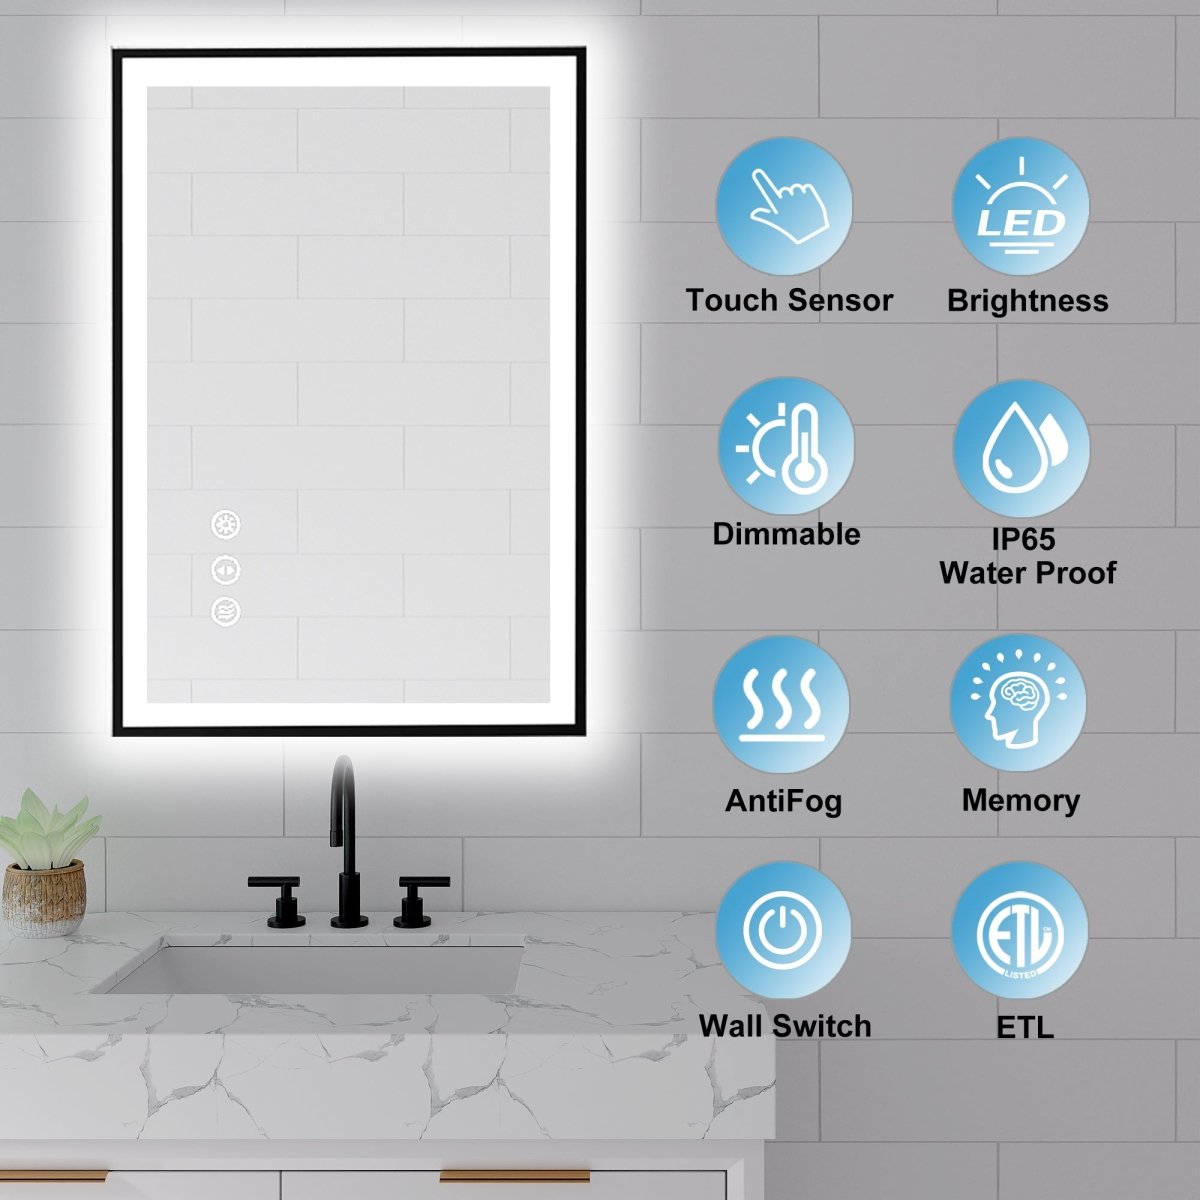 Apex-Noir 36"x36" Framed LED Lighted Bathroom Mirror